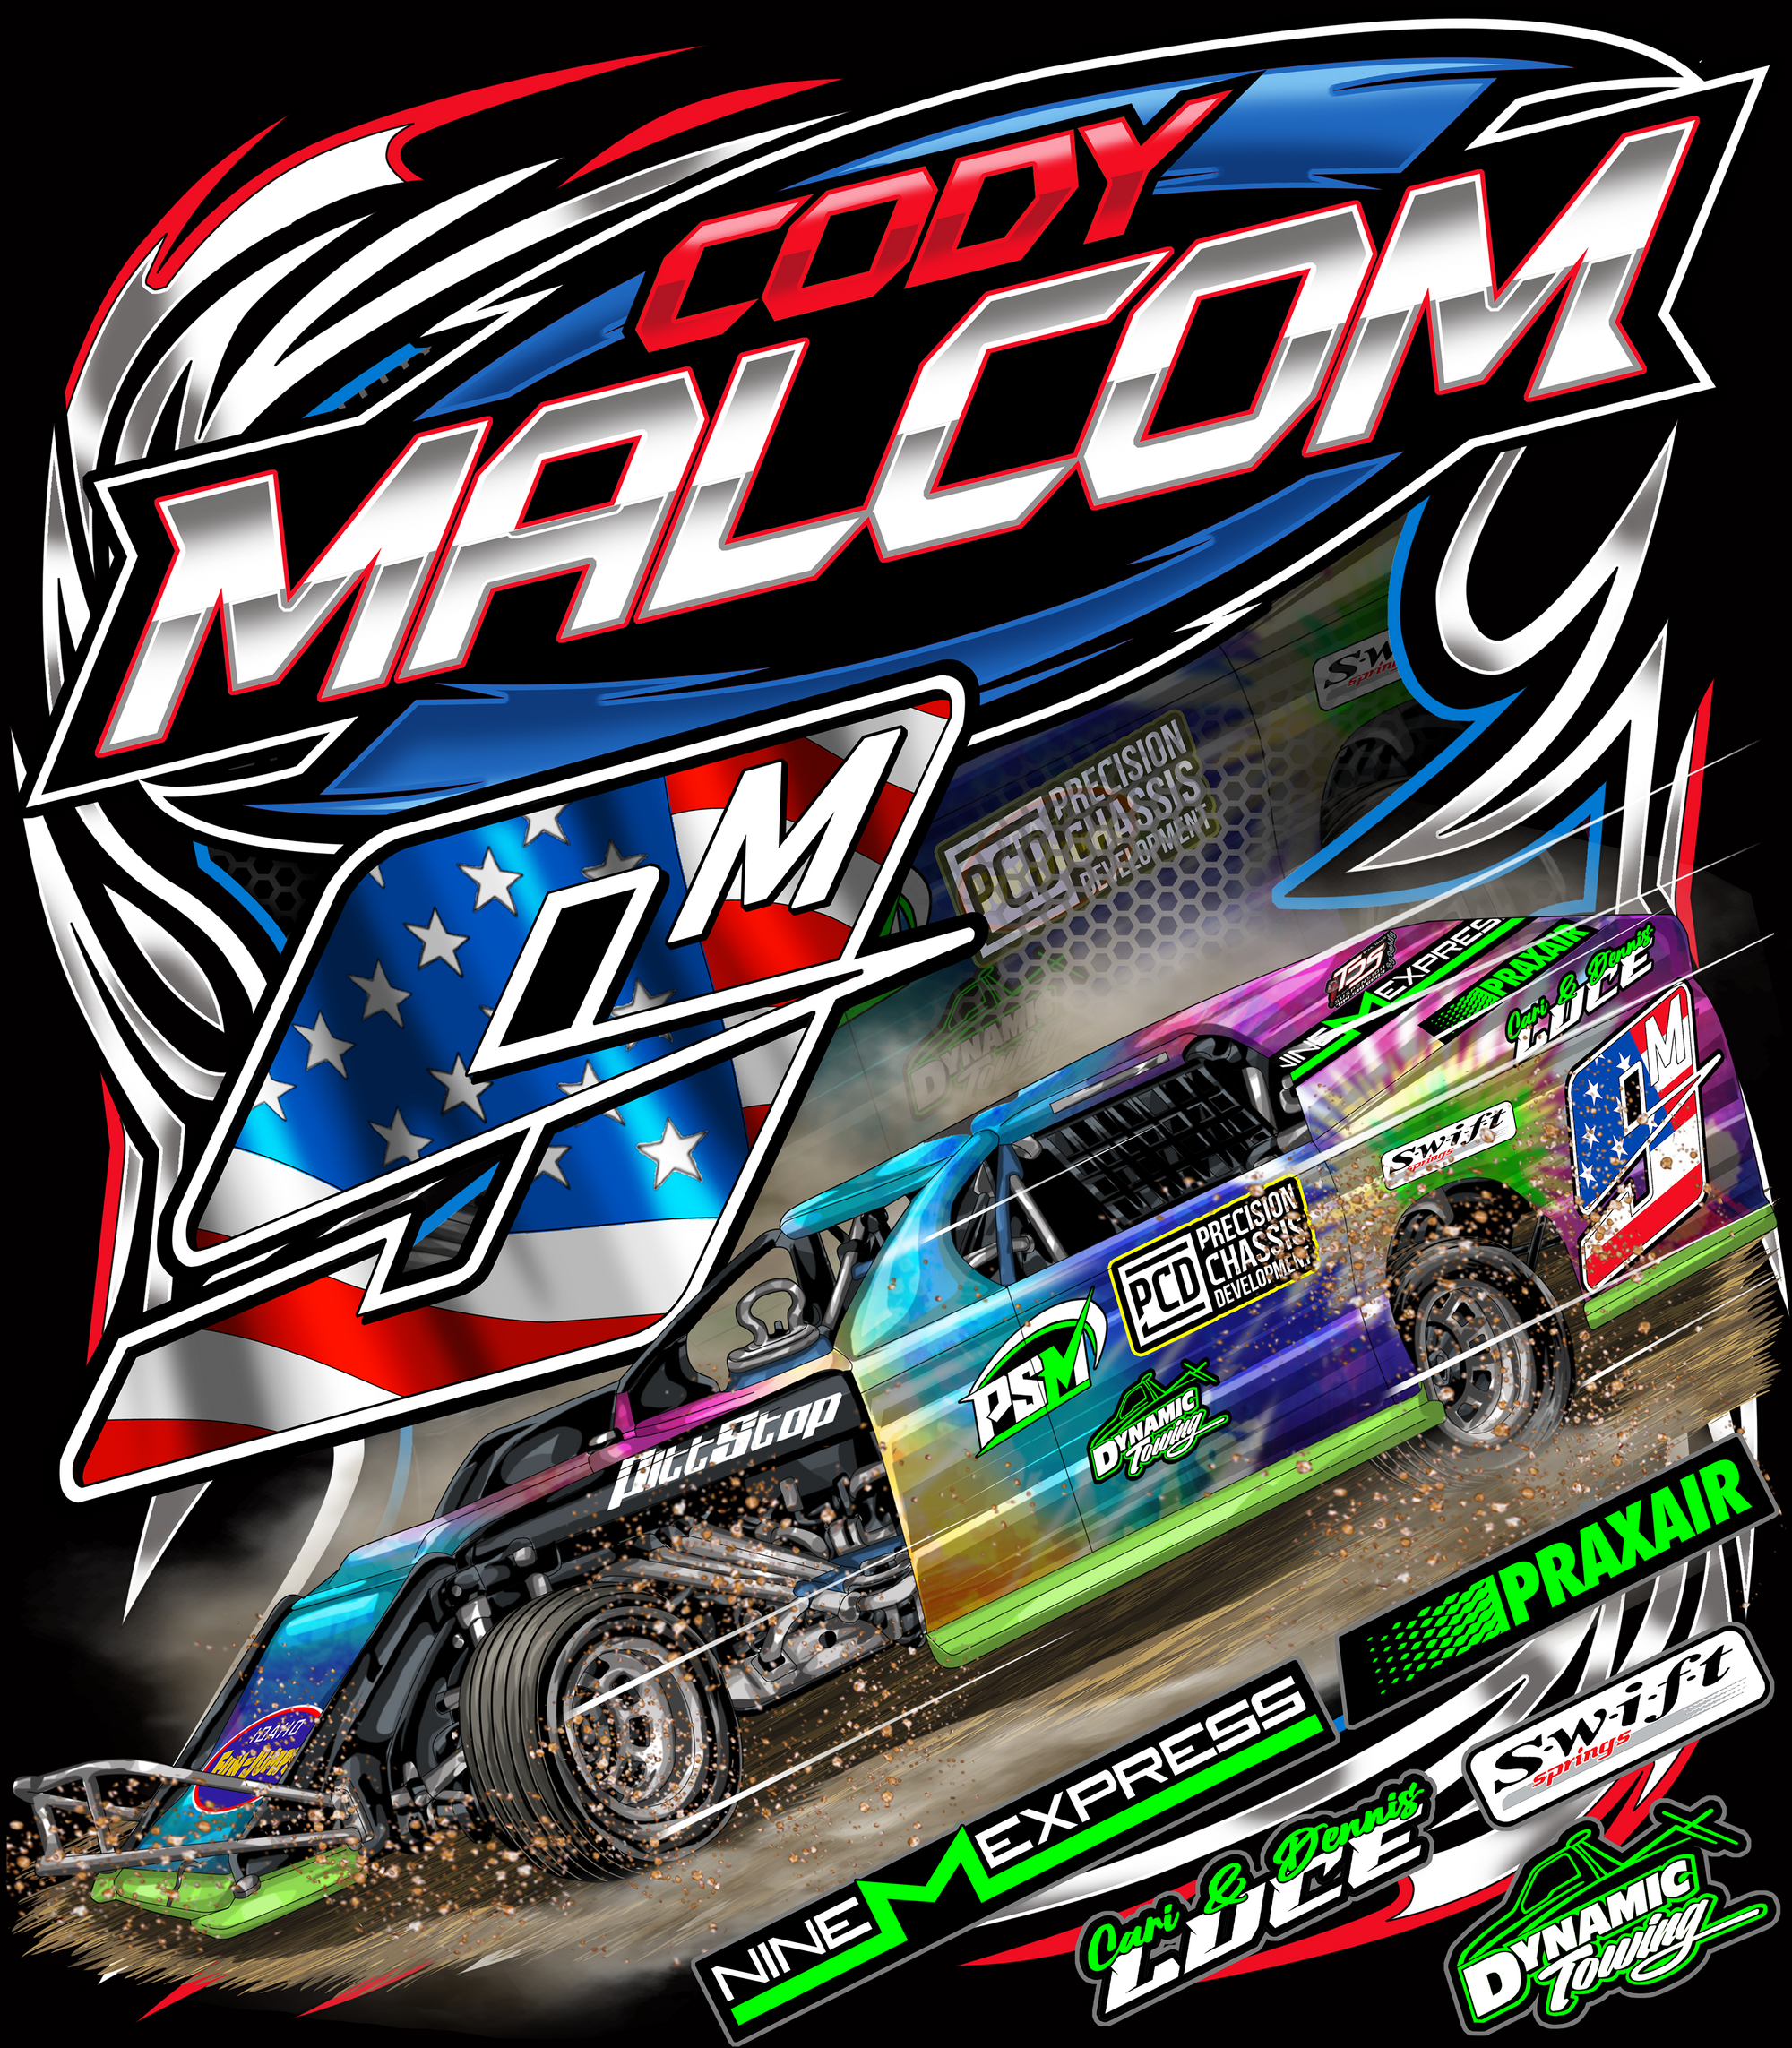 Cody Malcom